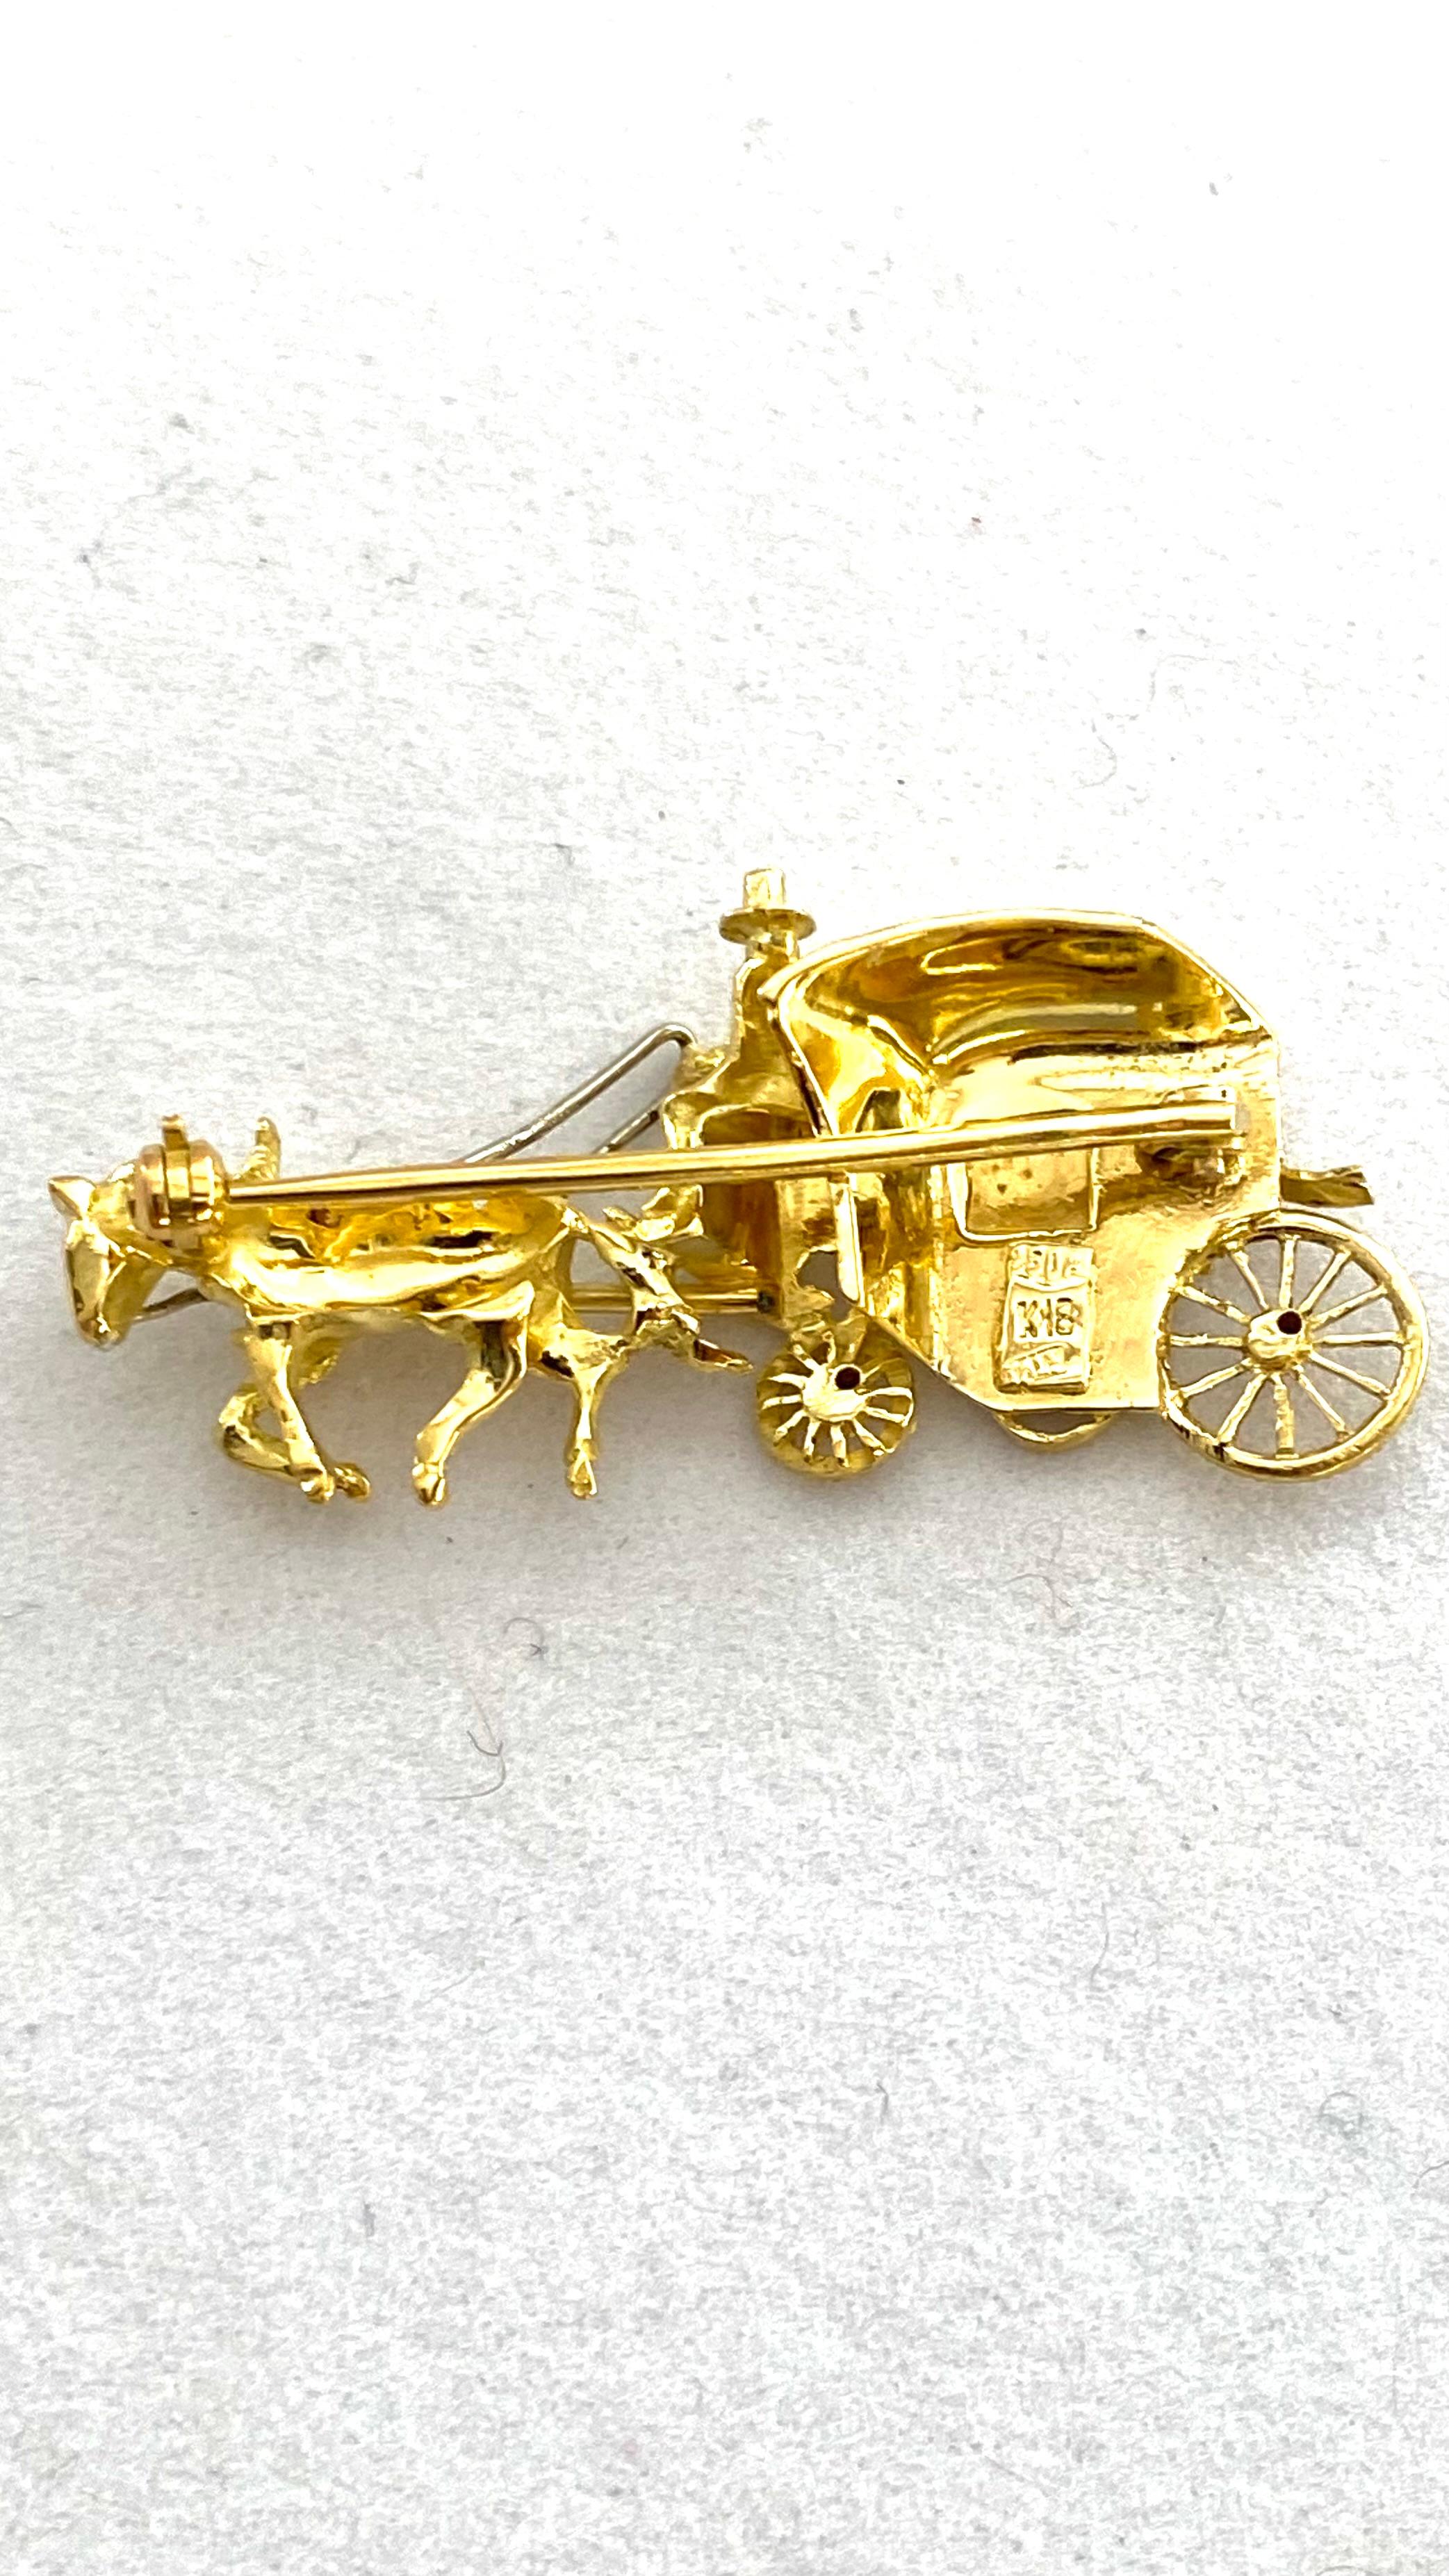 Taille ronde Broche en or jaune 18 carats, sertie de pierres précieuses, cheval et calèche en vente